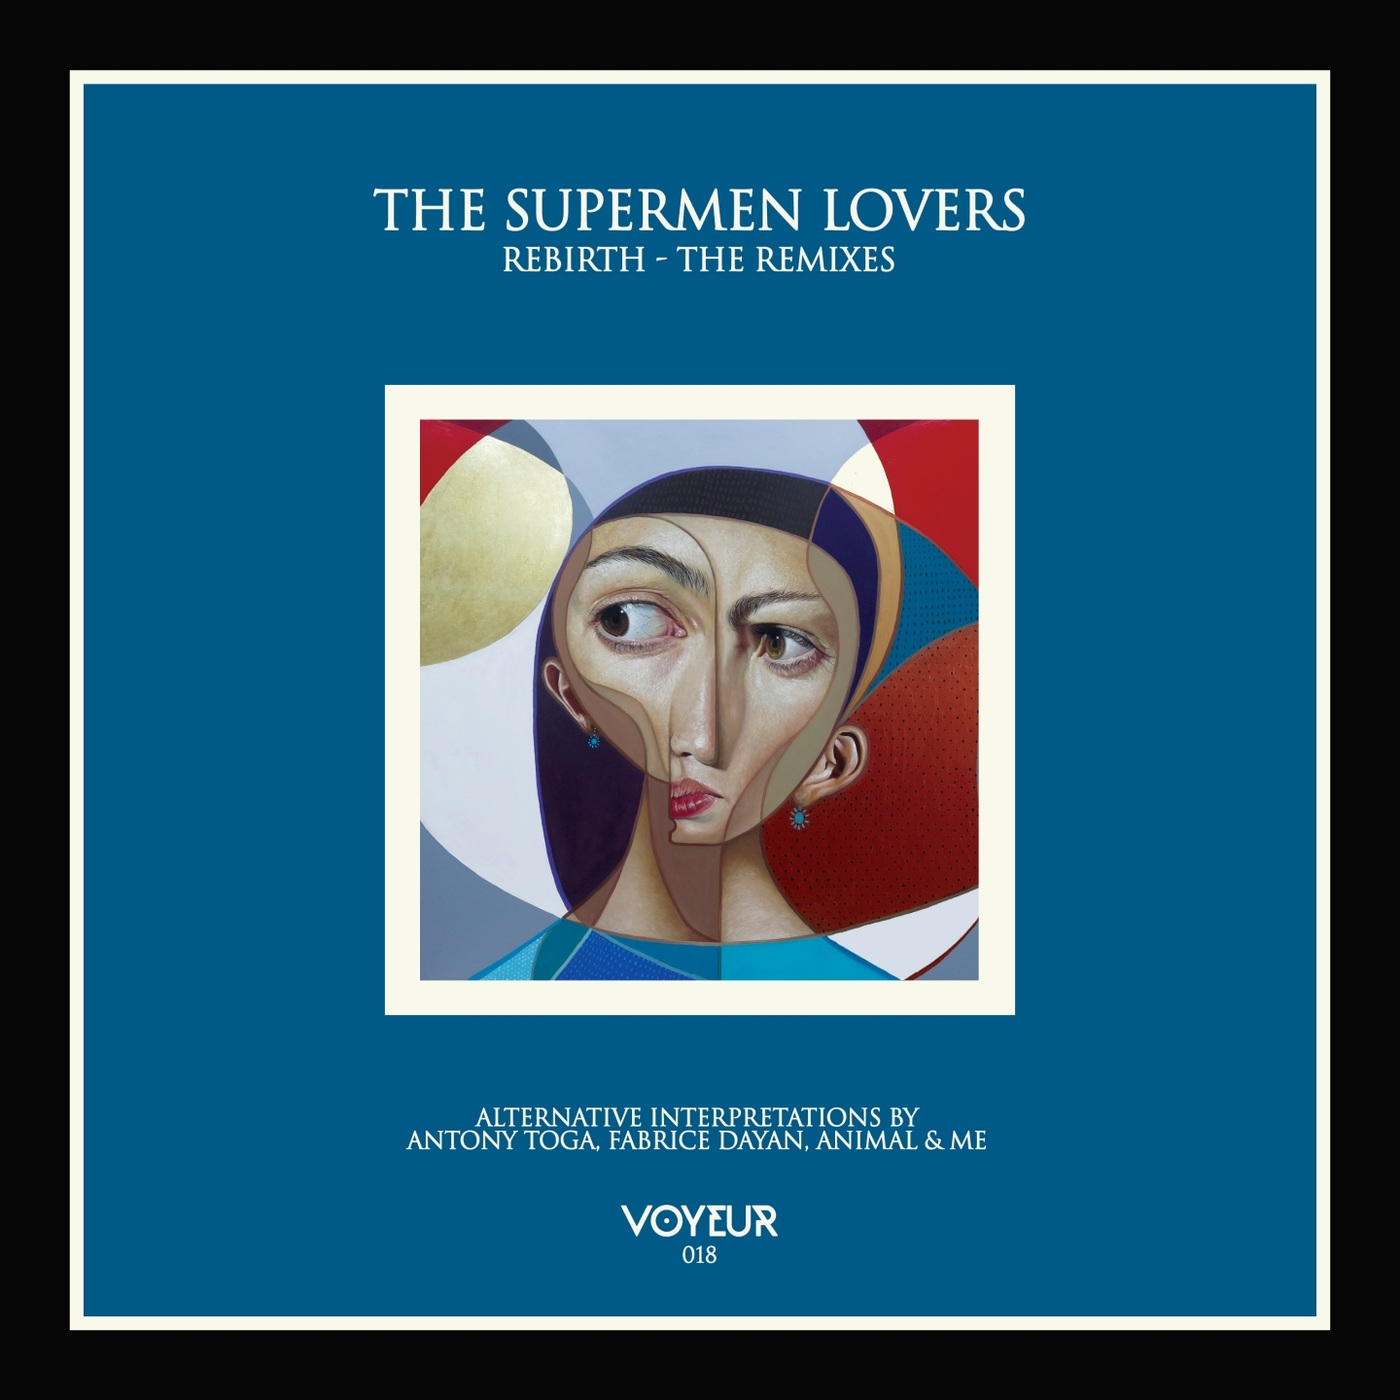 The Supermen Lovers - Rebirth (The Remixes) / Voyeur